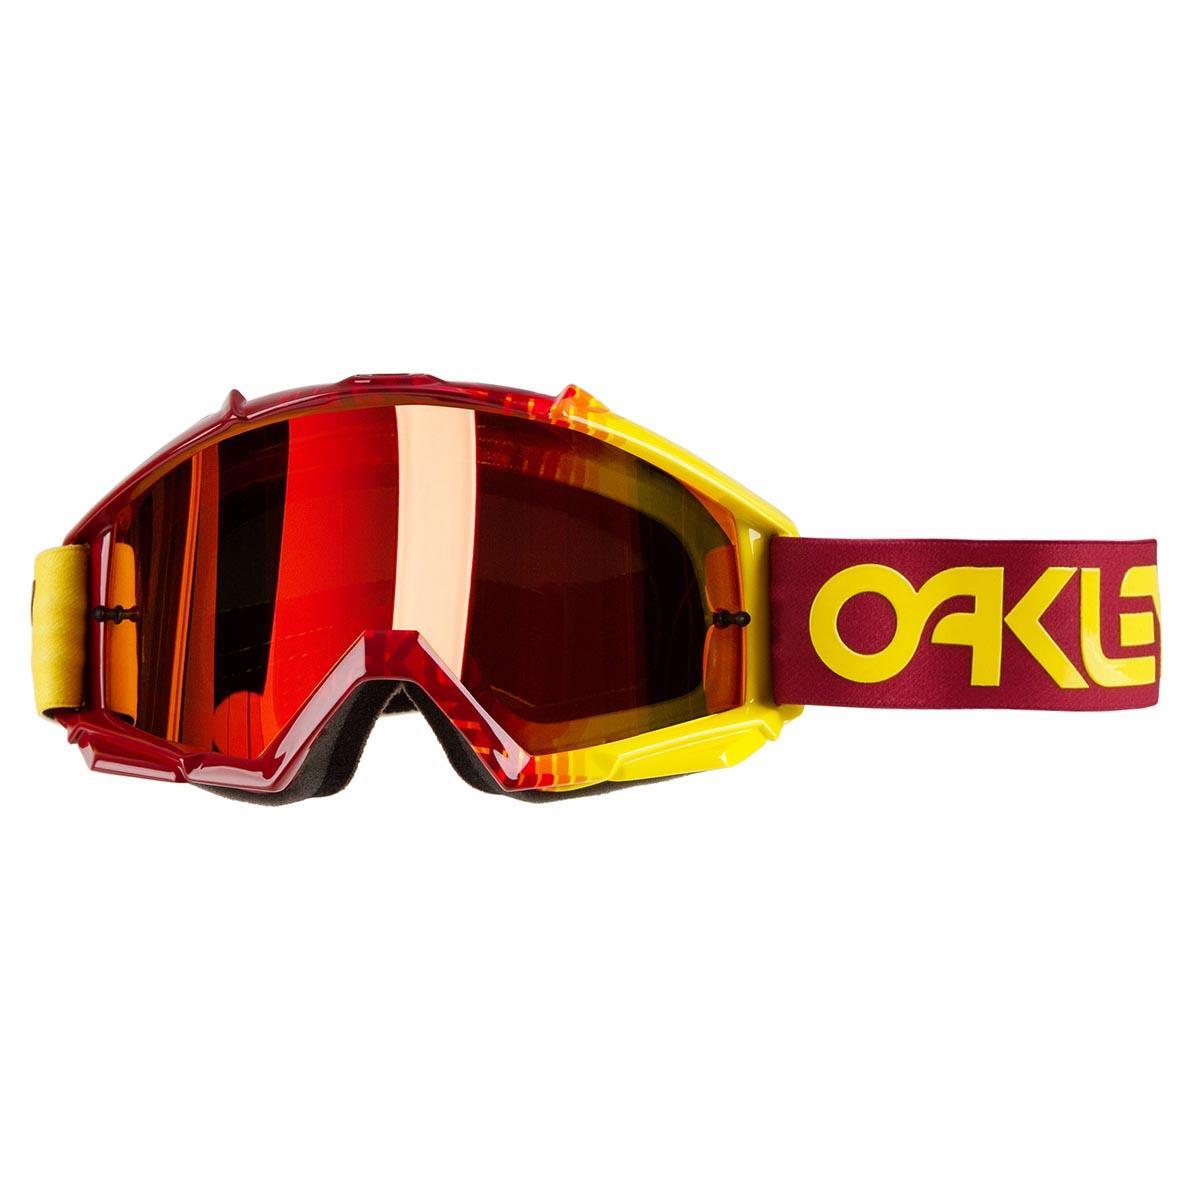 Oakley Masque Proven MX Factory Fade Red/Yellow - Fire Iridium Anti-Fog